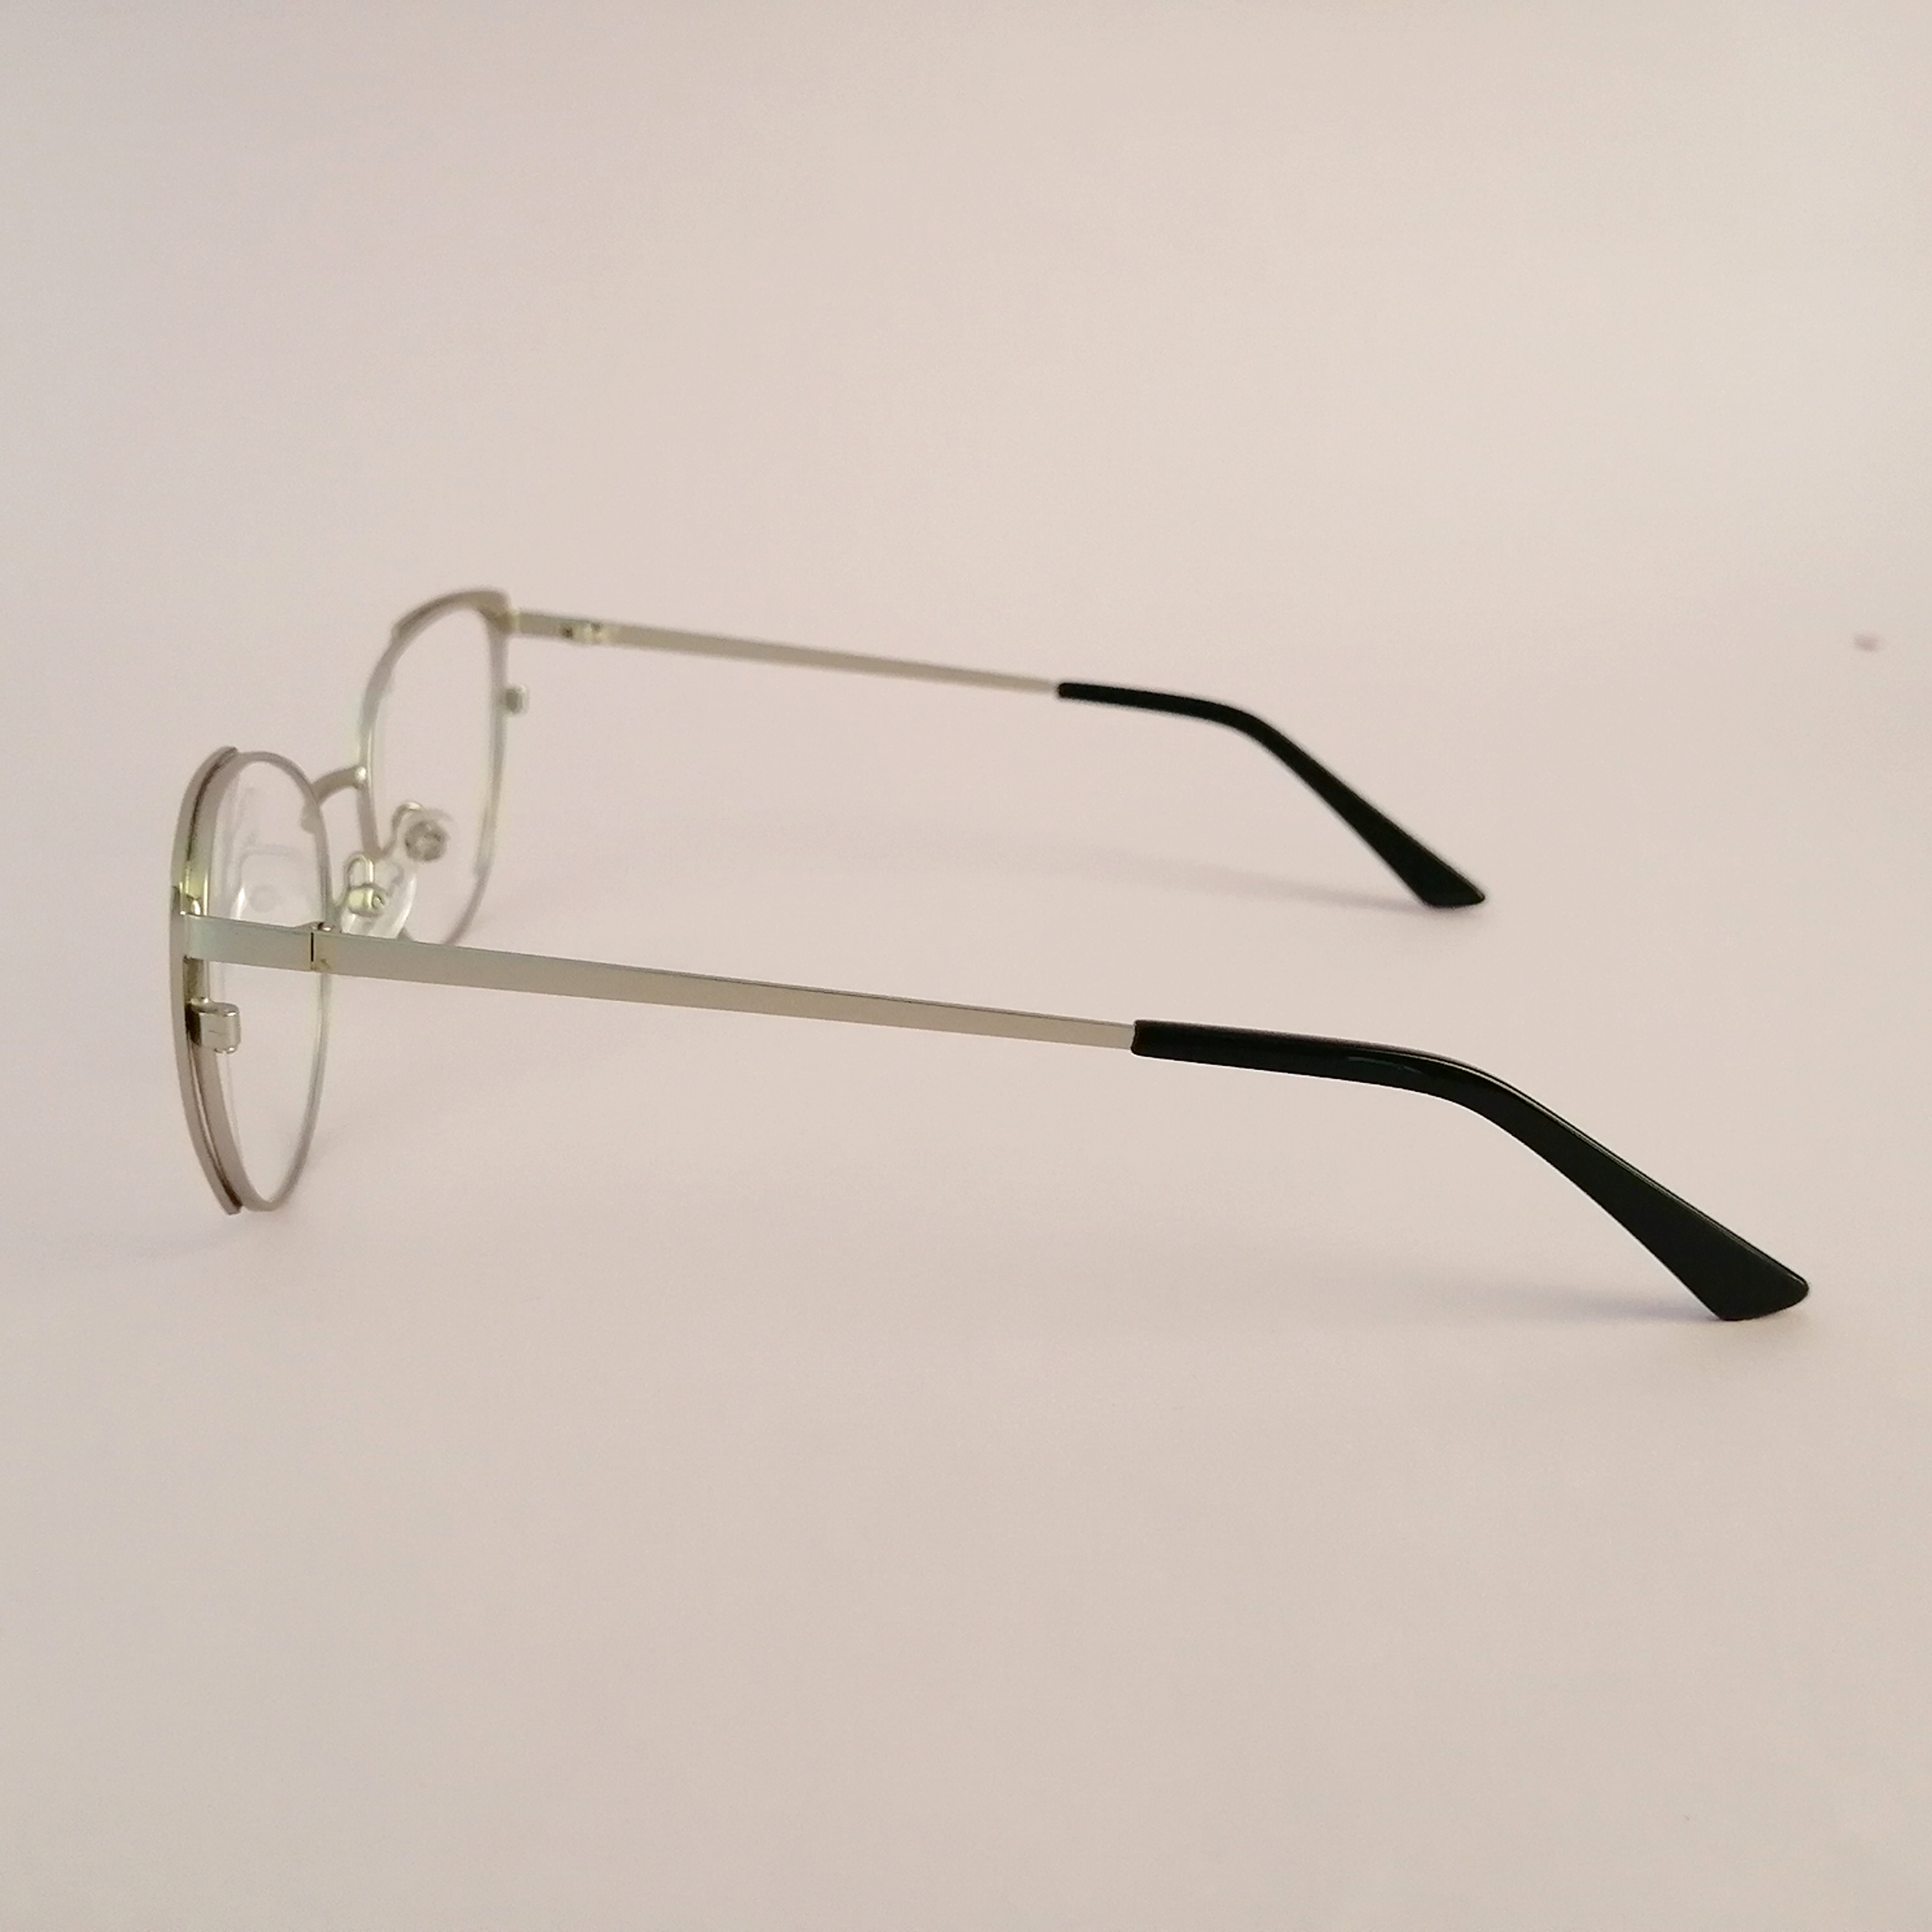 Hot Selling China Factory Cat Eye Glasses Women Newest Style Fashion Eyewear Cateye Metal Optical Frames